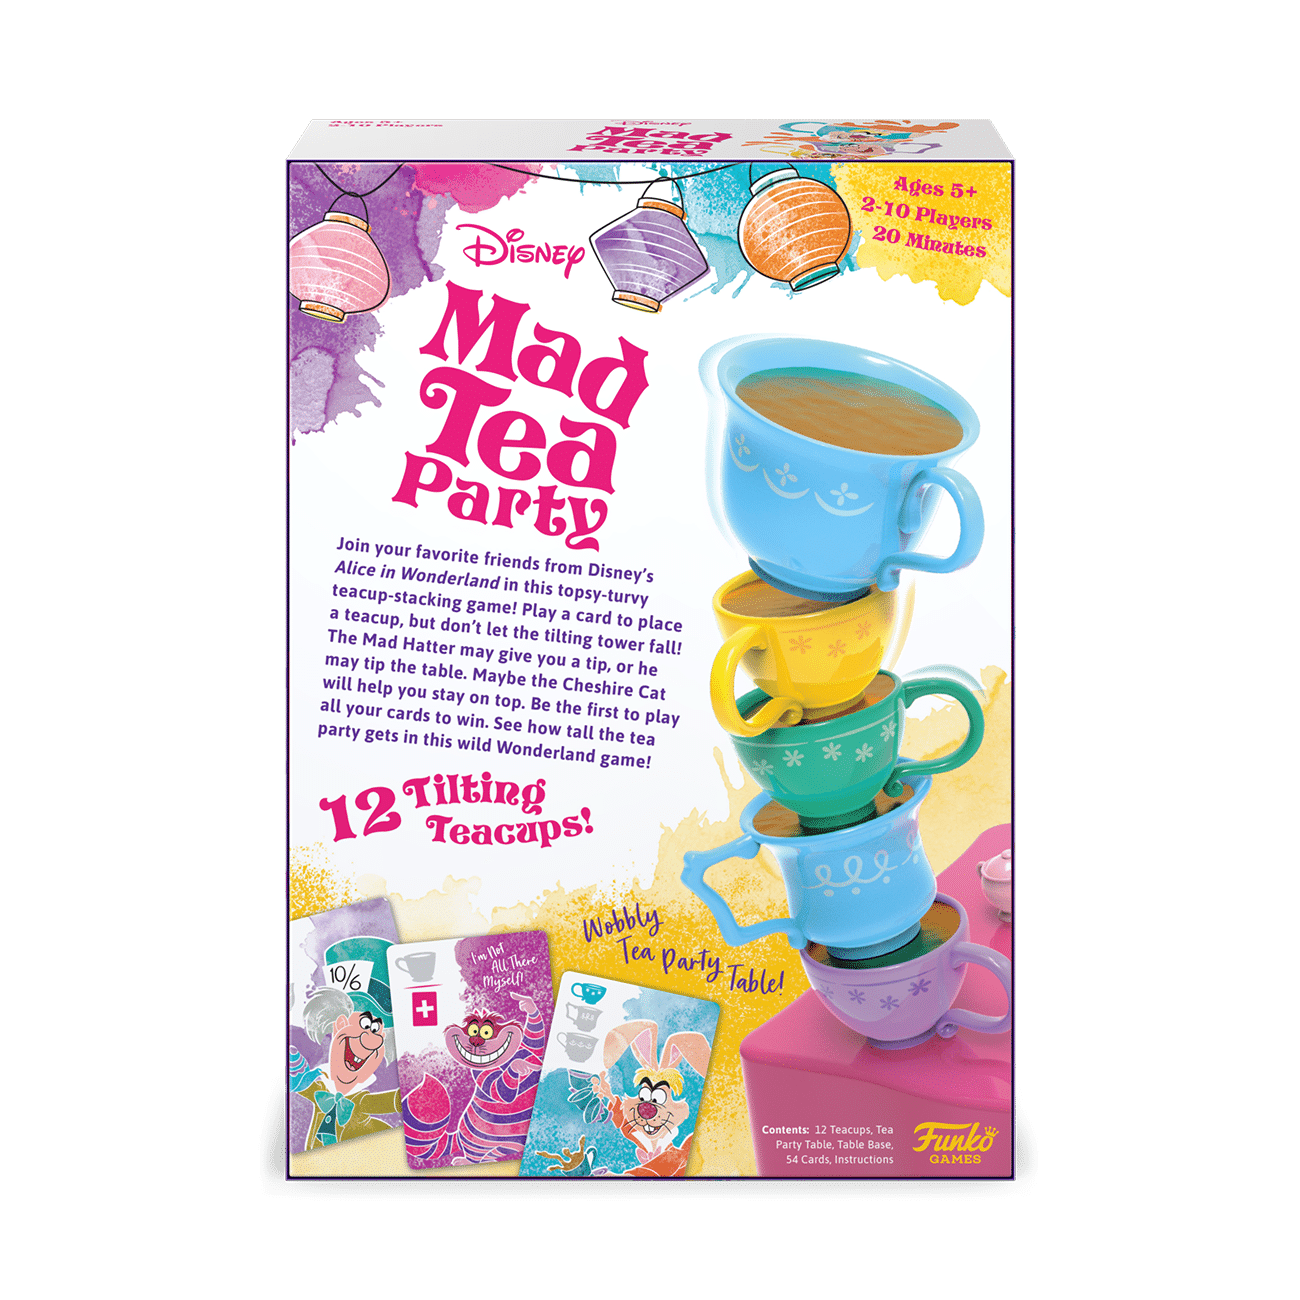 Details about   Disney Parks Alice in Wonderland Mad Tea Party Tea Cup Zipper Bag Charm NEW